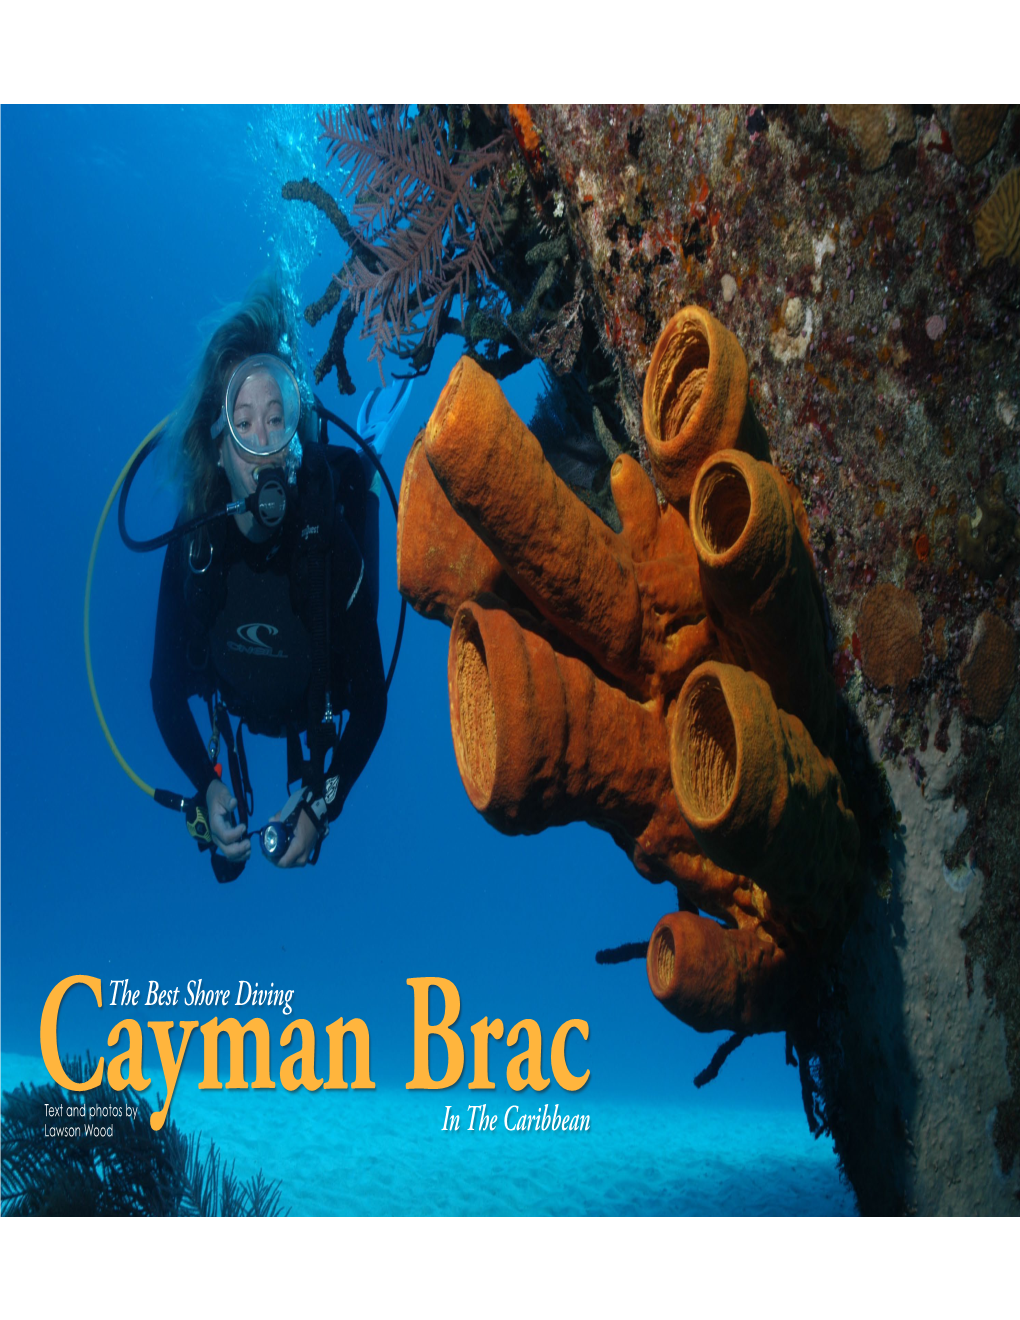 Best Shore Diving in the Caribbean, Cayman Brac!